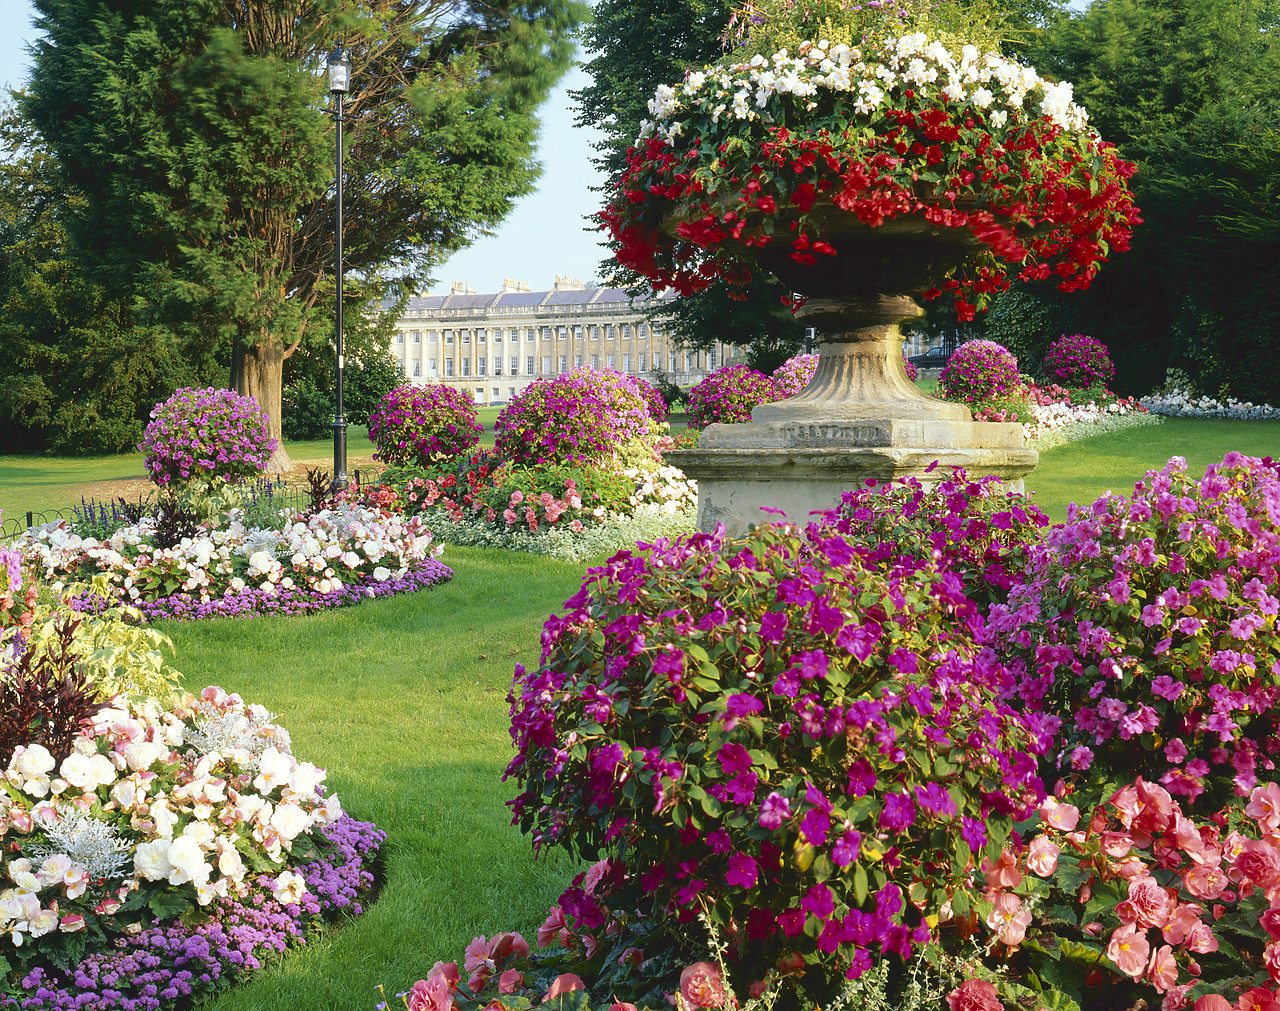 #200082-8 - Royal Crescent Flower Garden, Bath, Avon, England